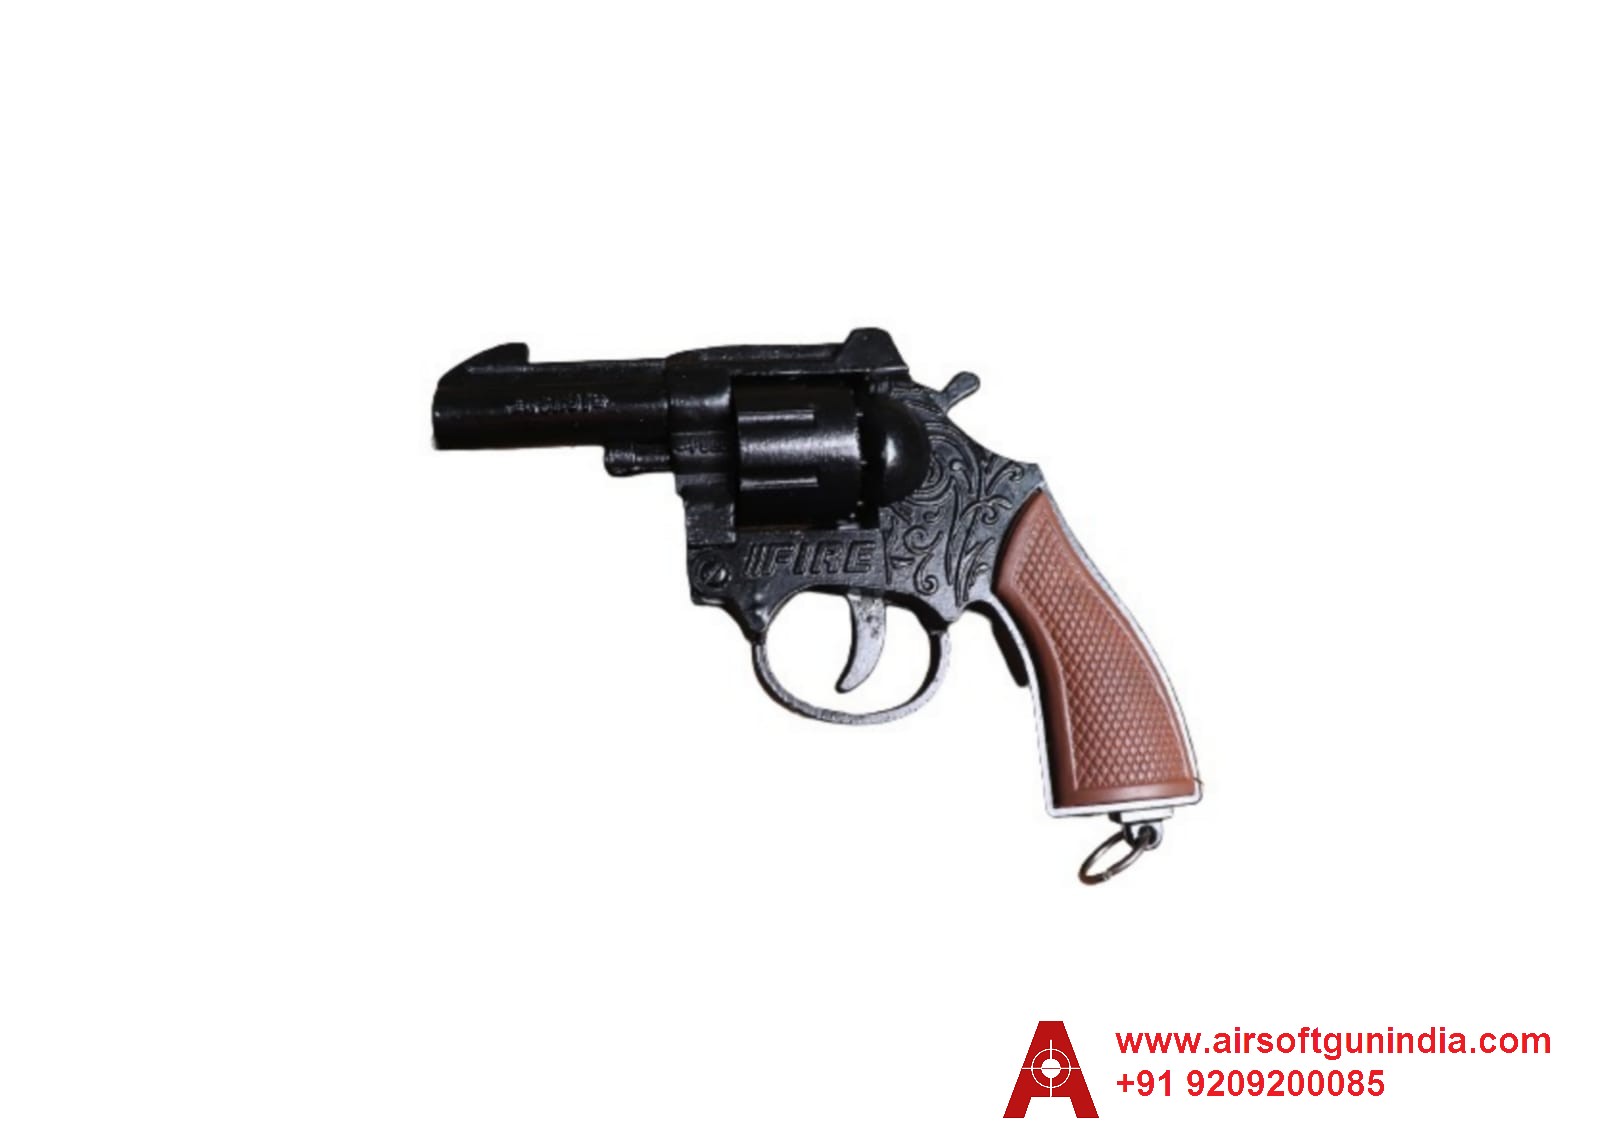 Airsoft Guns for sale in Coimbatore, Tamil Nadu | Facebook Marketplace |  Facebook